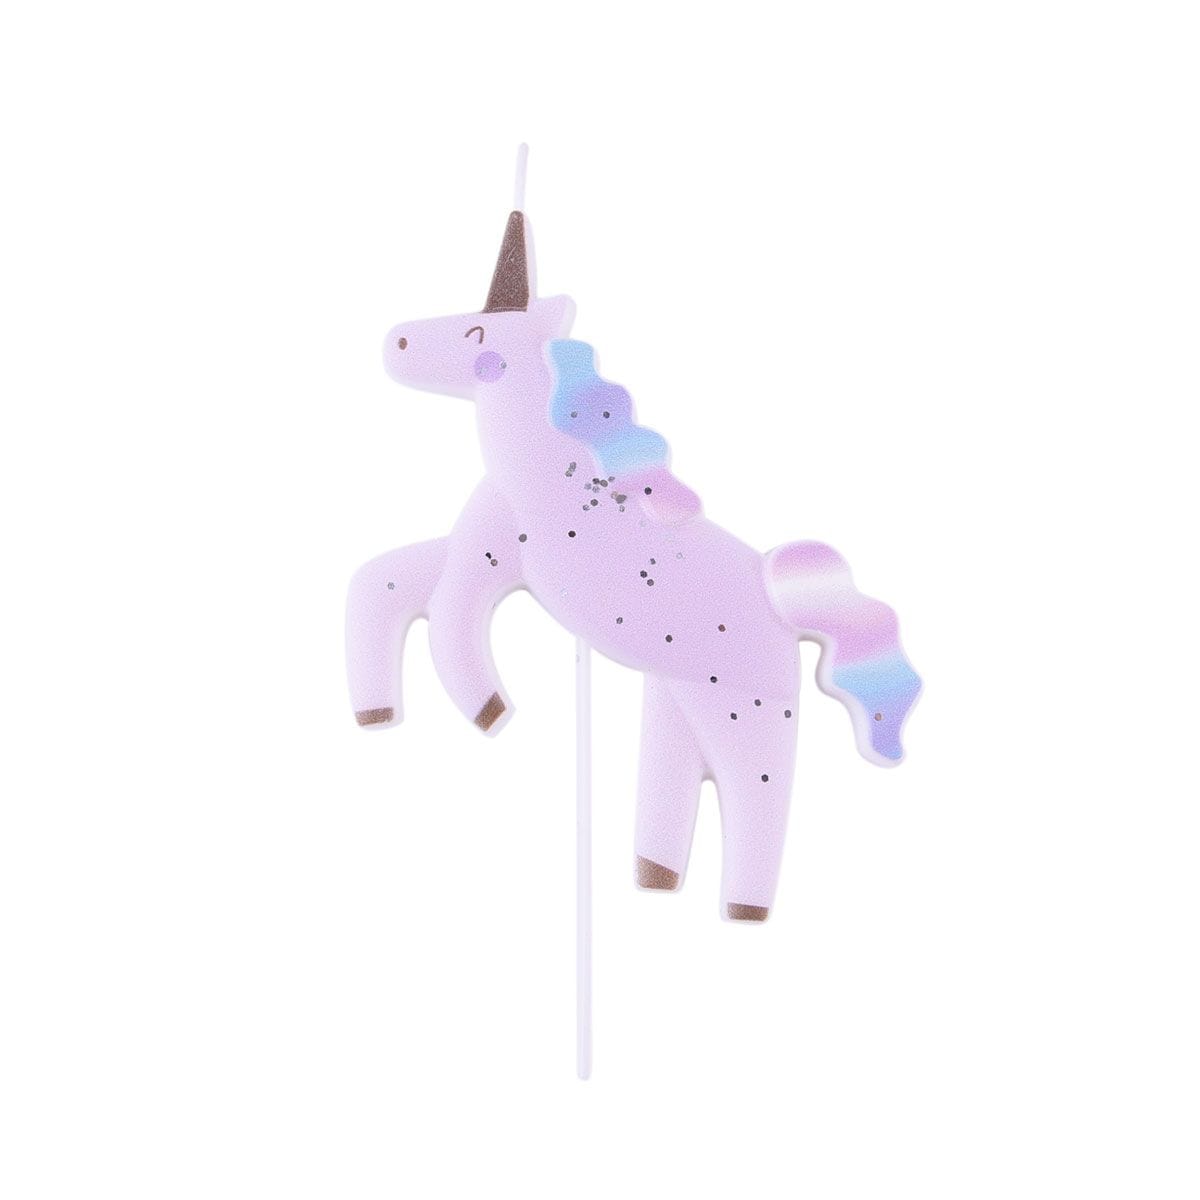 PME - Tårtljus Glittrig Unicorn